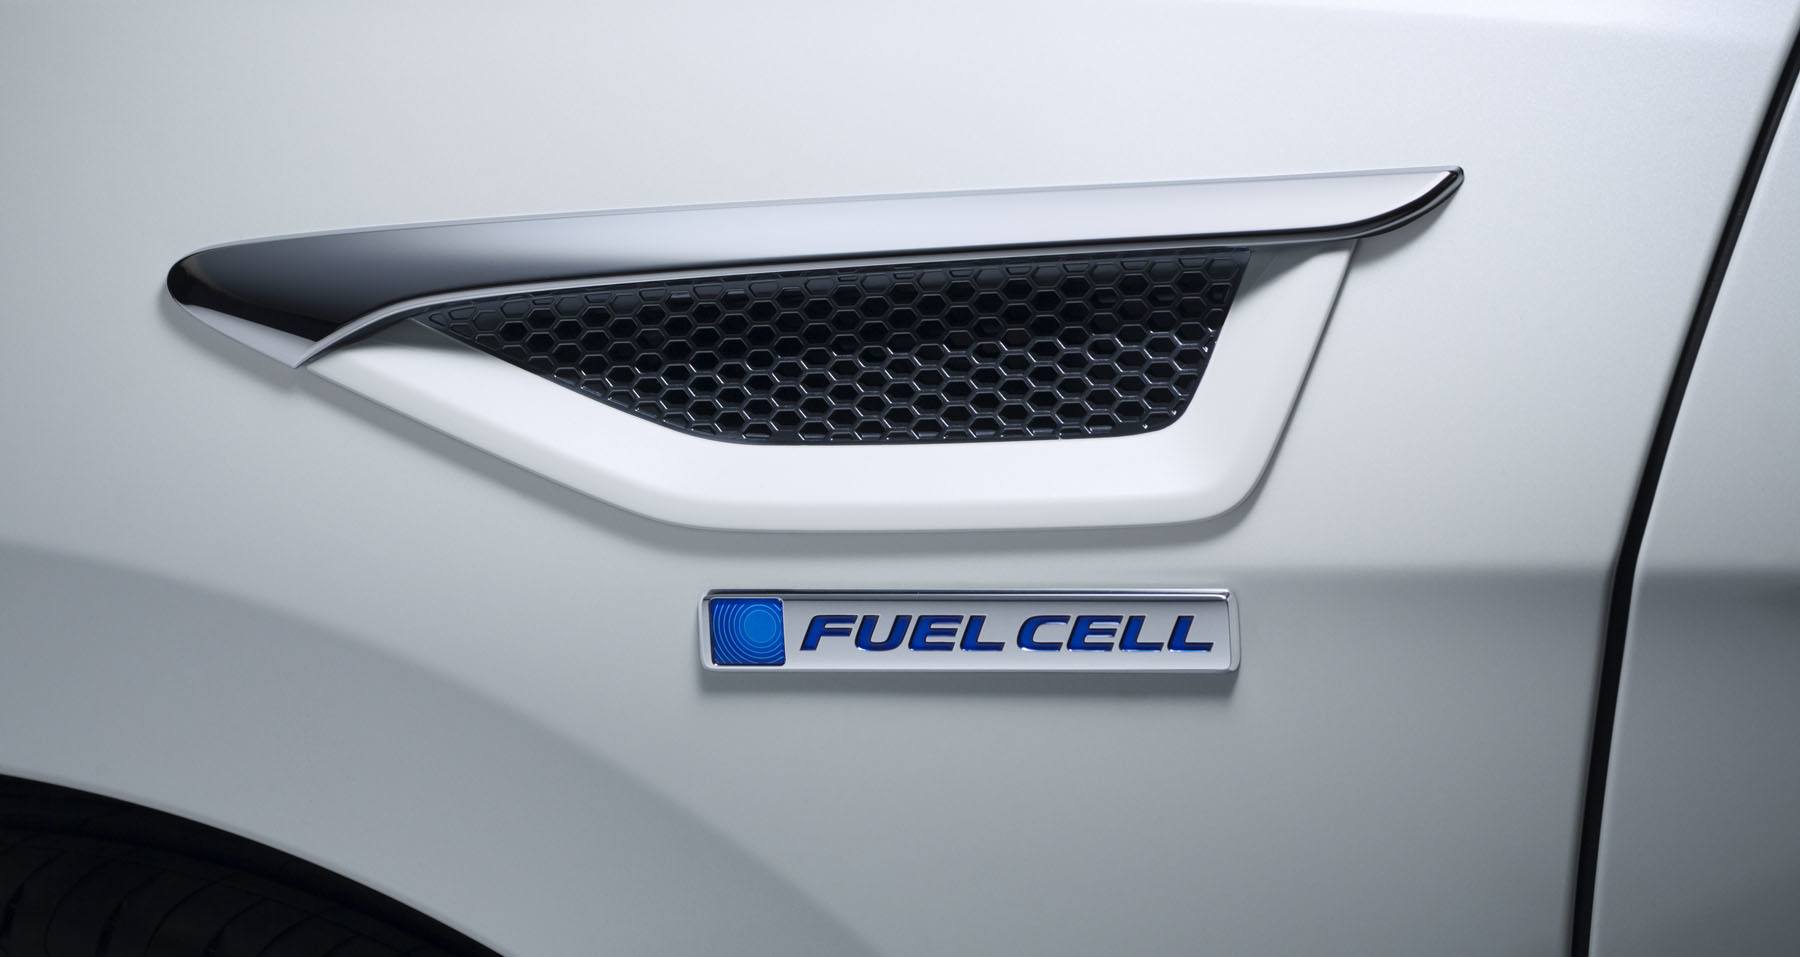 Honda Clarity fuel cell